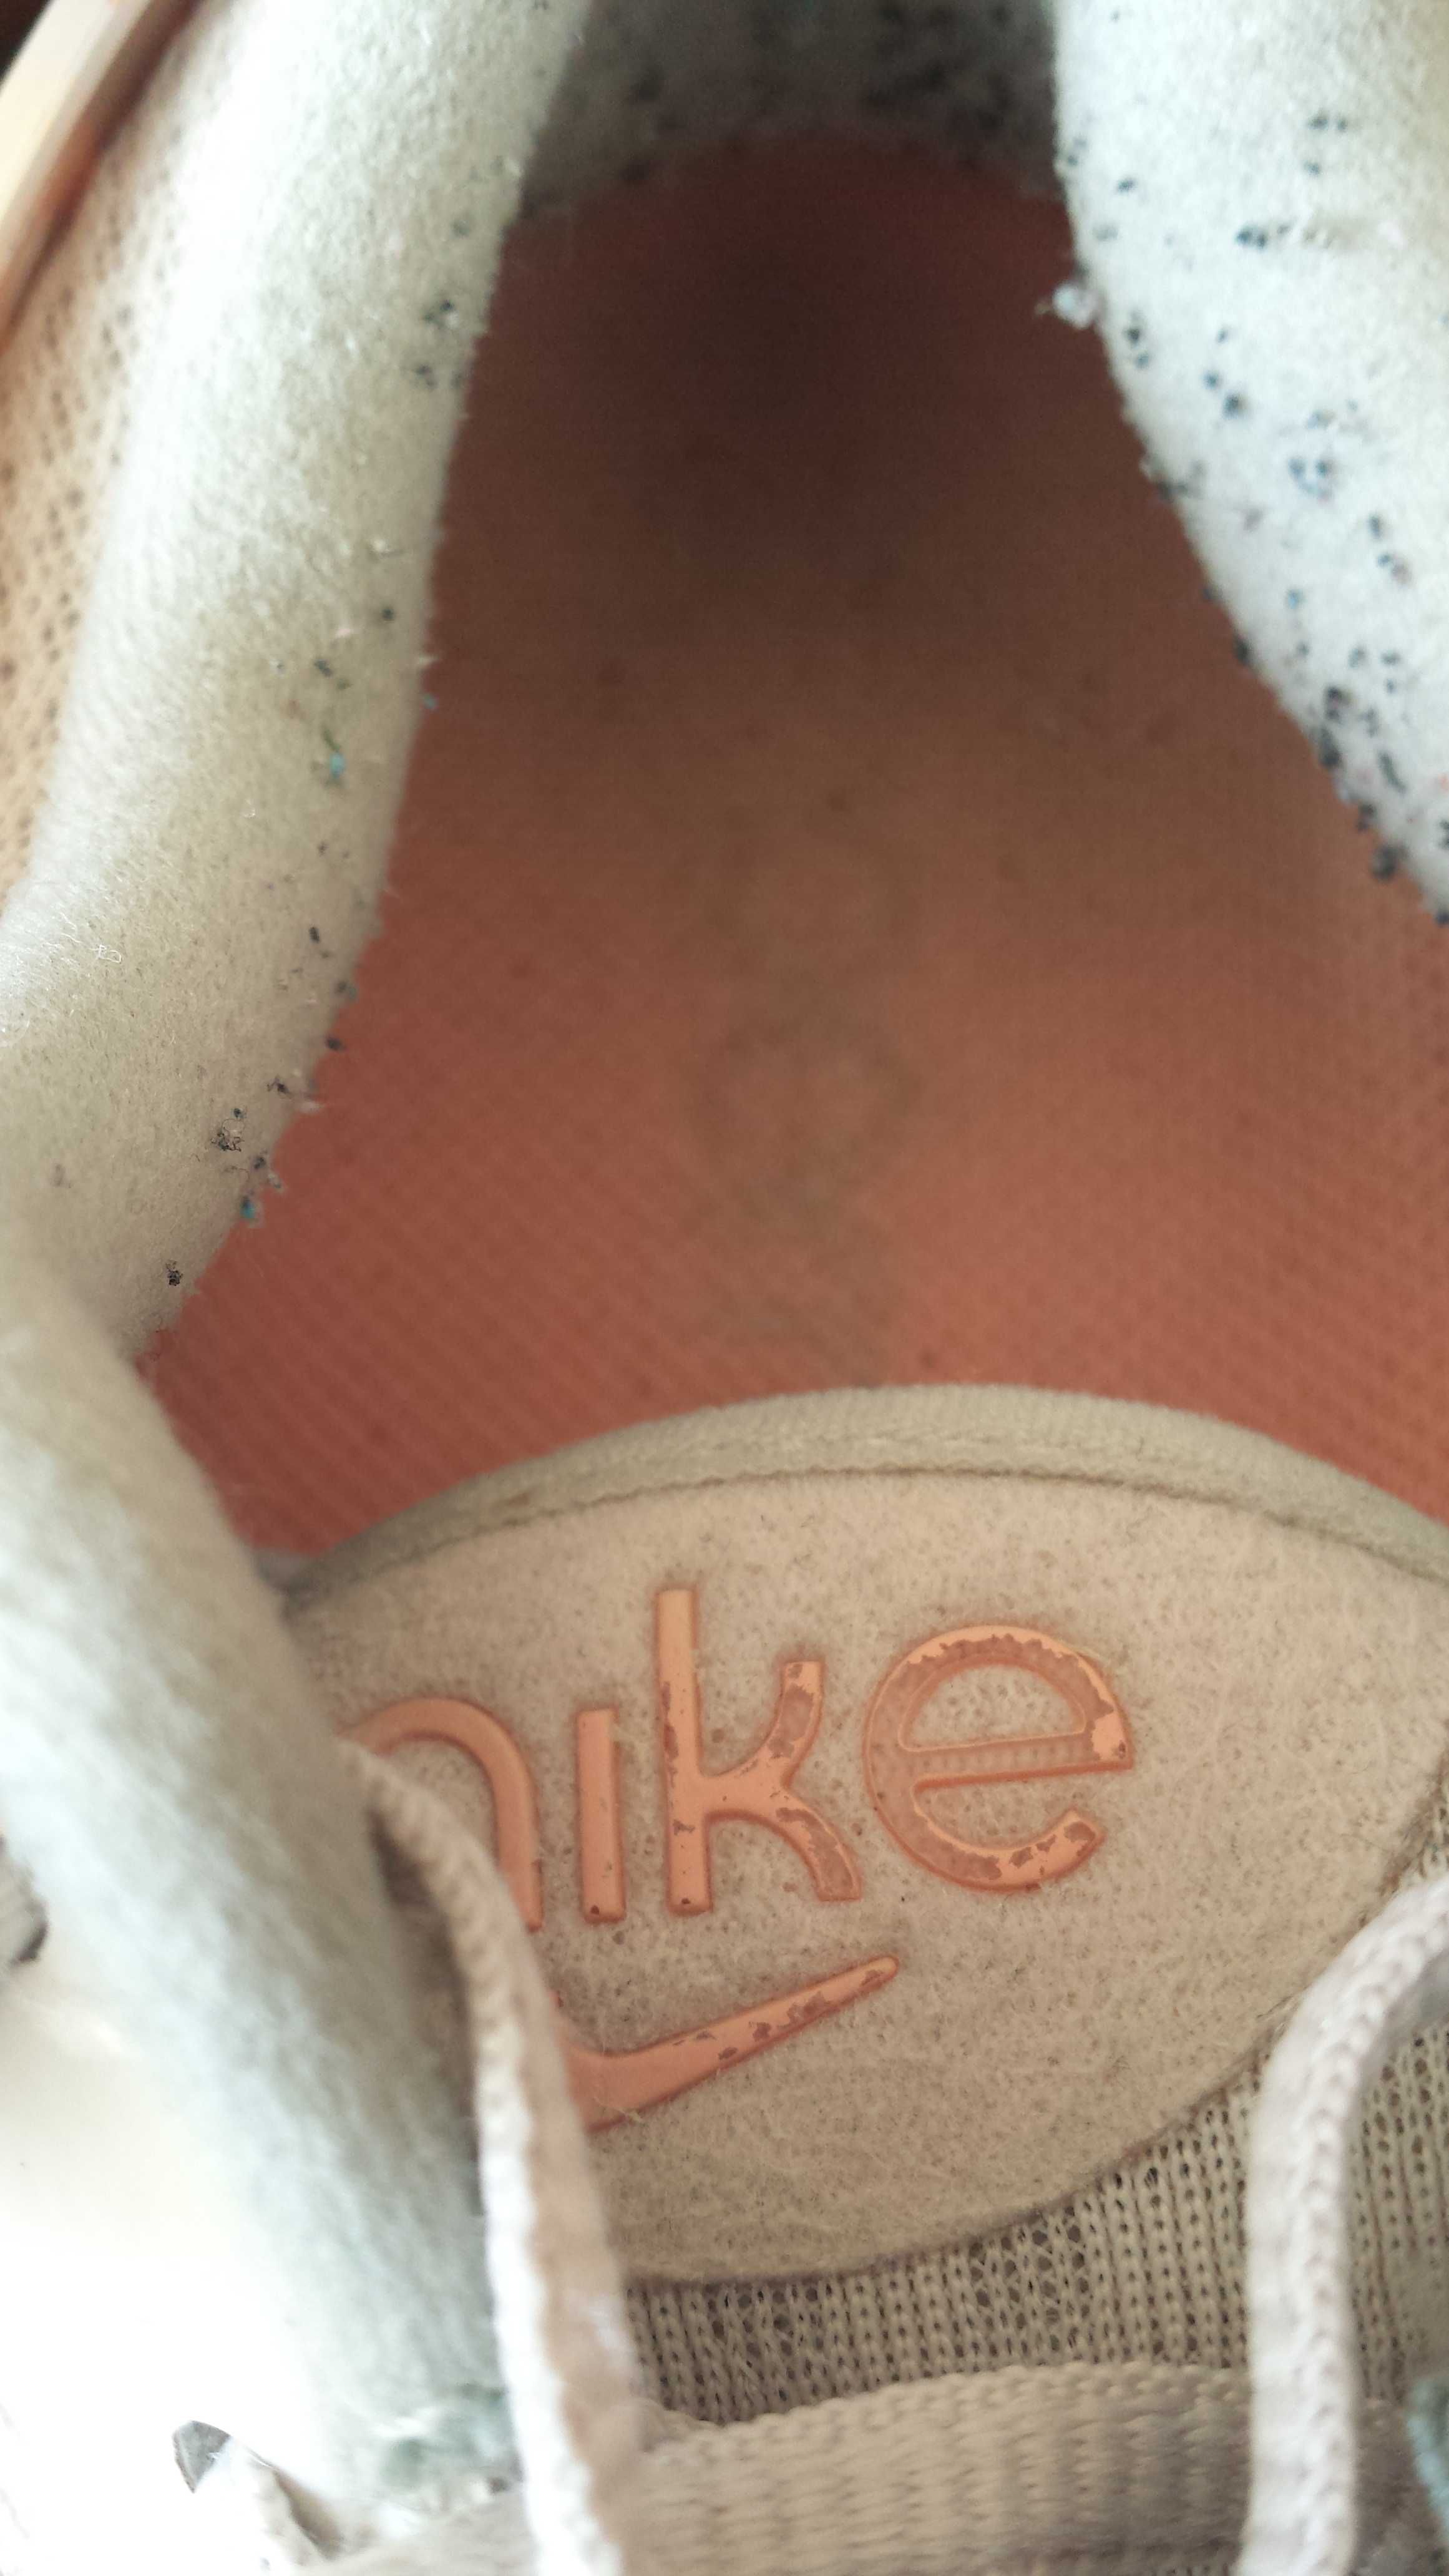 Обувки Nike Superrep Go 2 DJ3074 064 Desert Sand (40) за поправка